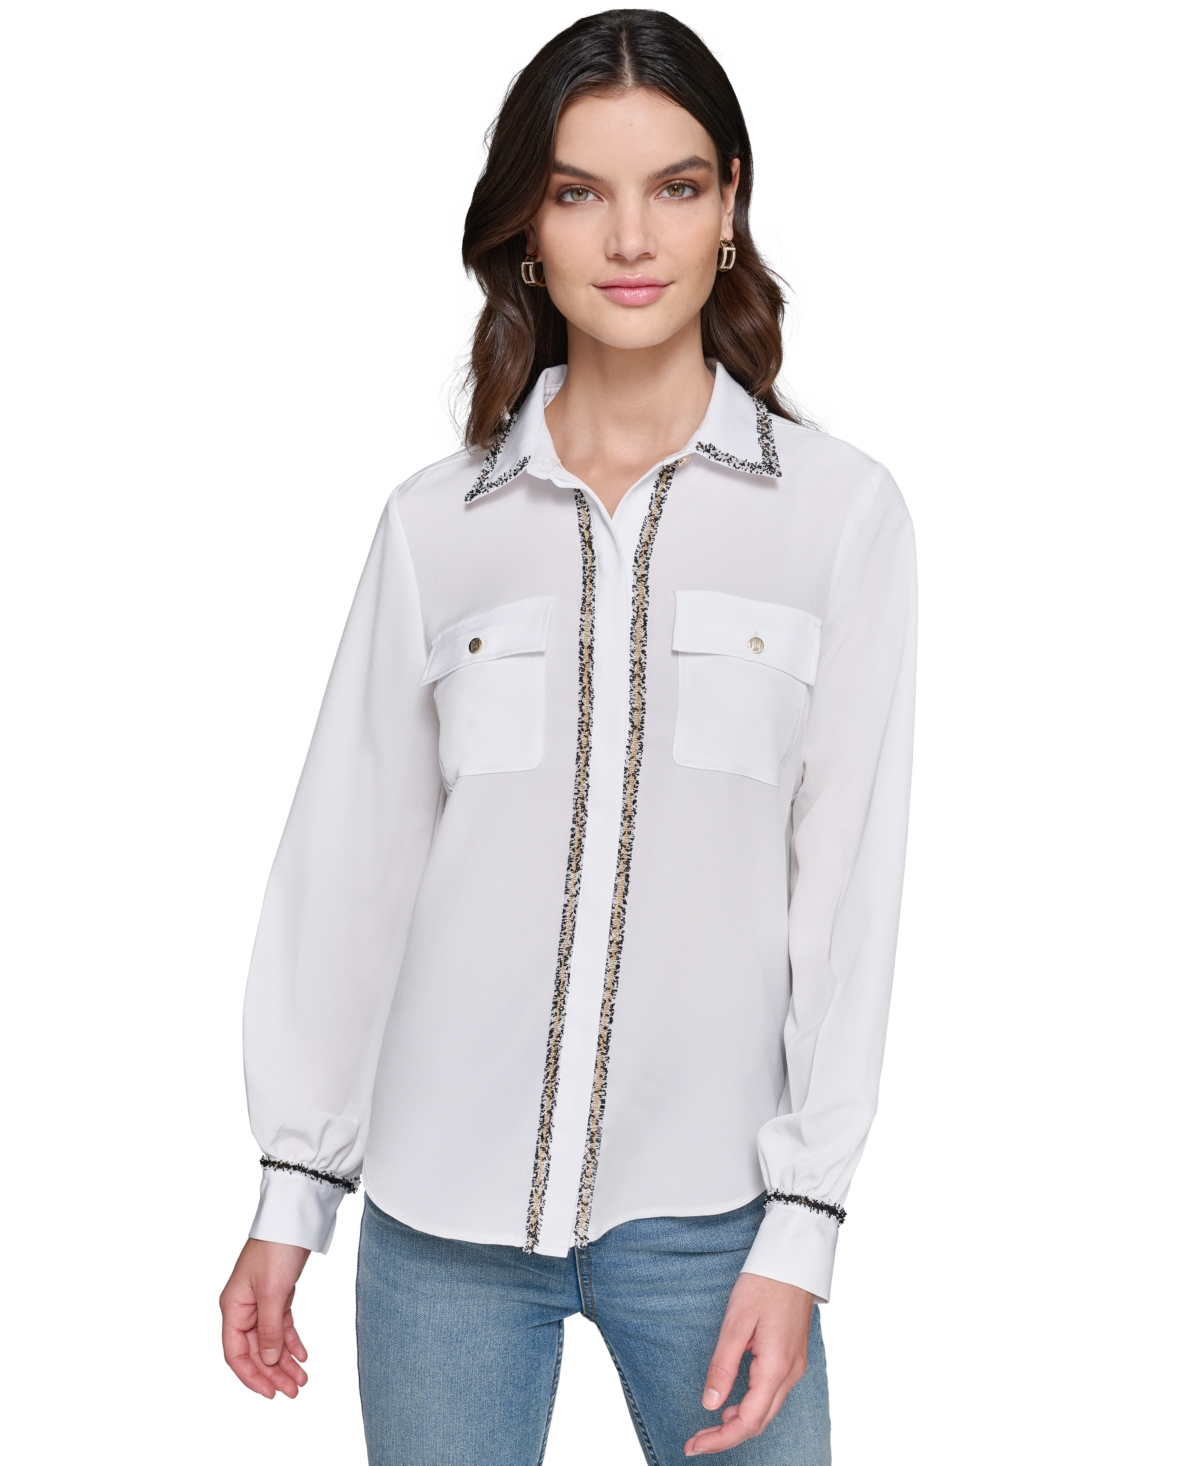 Women's Tweed-Trim Button-Front Top - Soft White